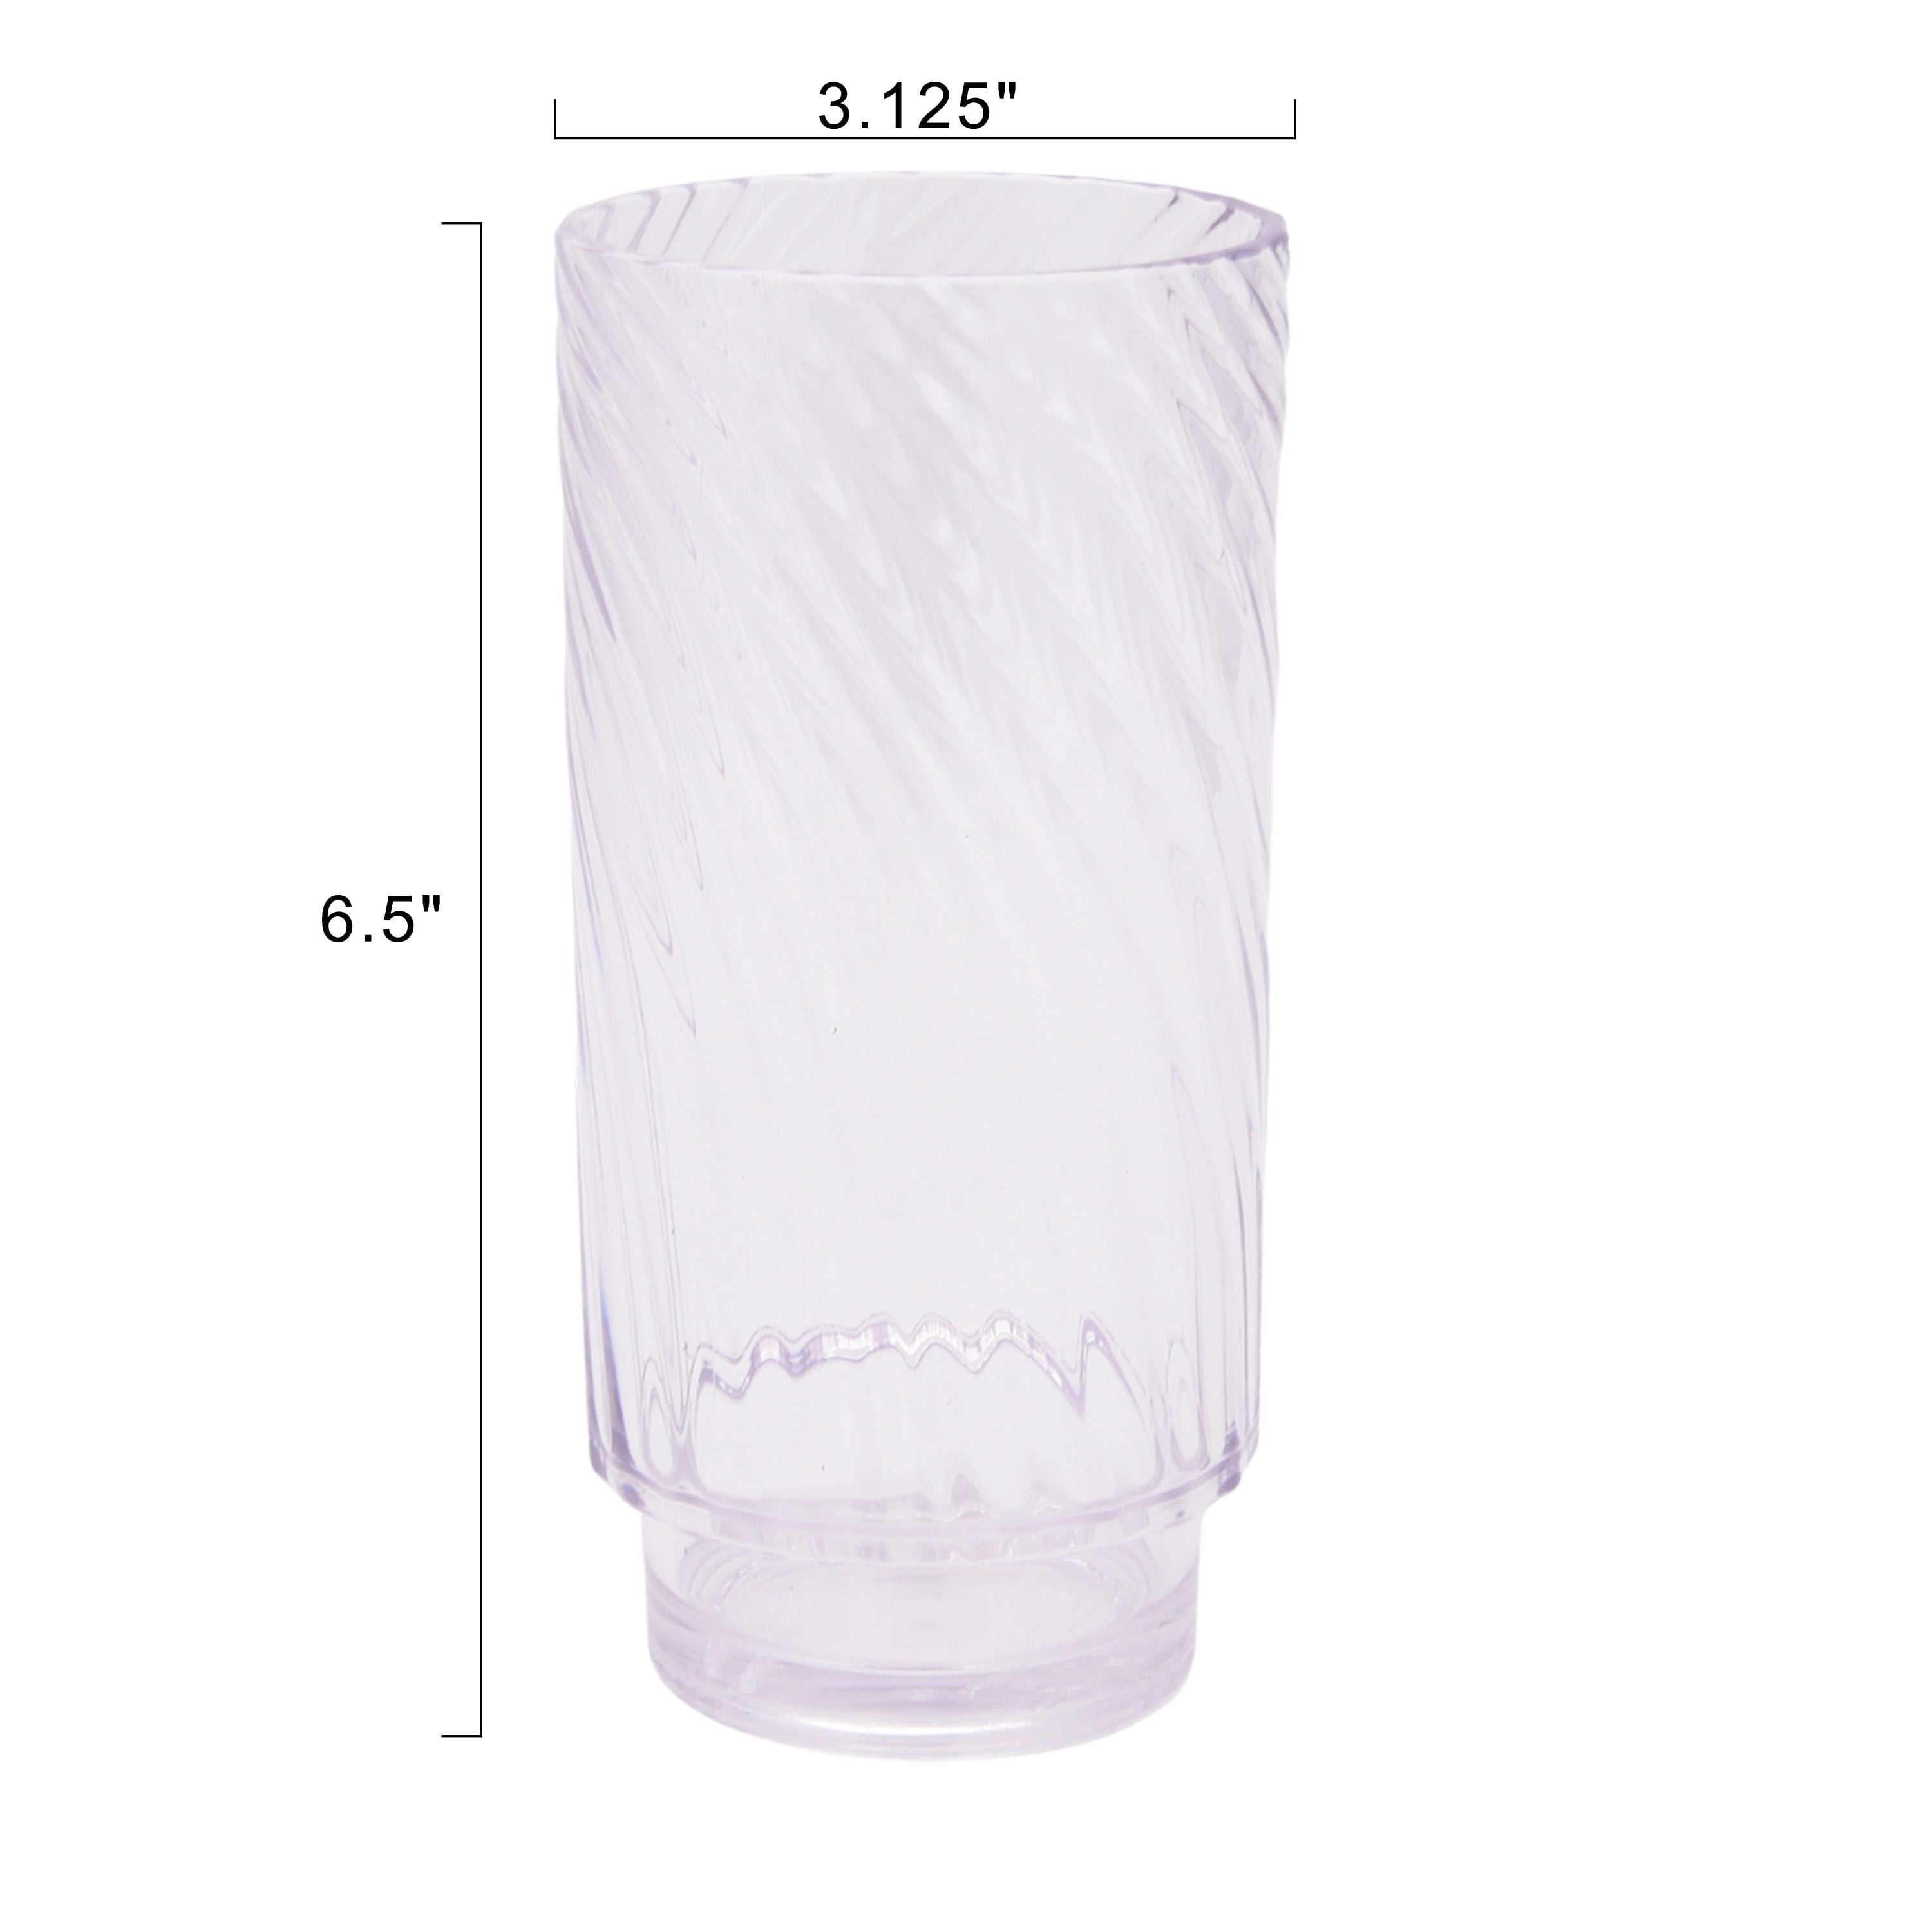 Ebern Designs Sofia 8 - Piece 16oz. Acrylic Drinking Glass Assorted  Glassware Set & Reviews